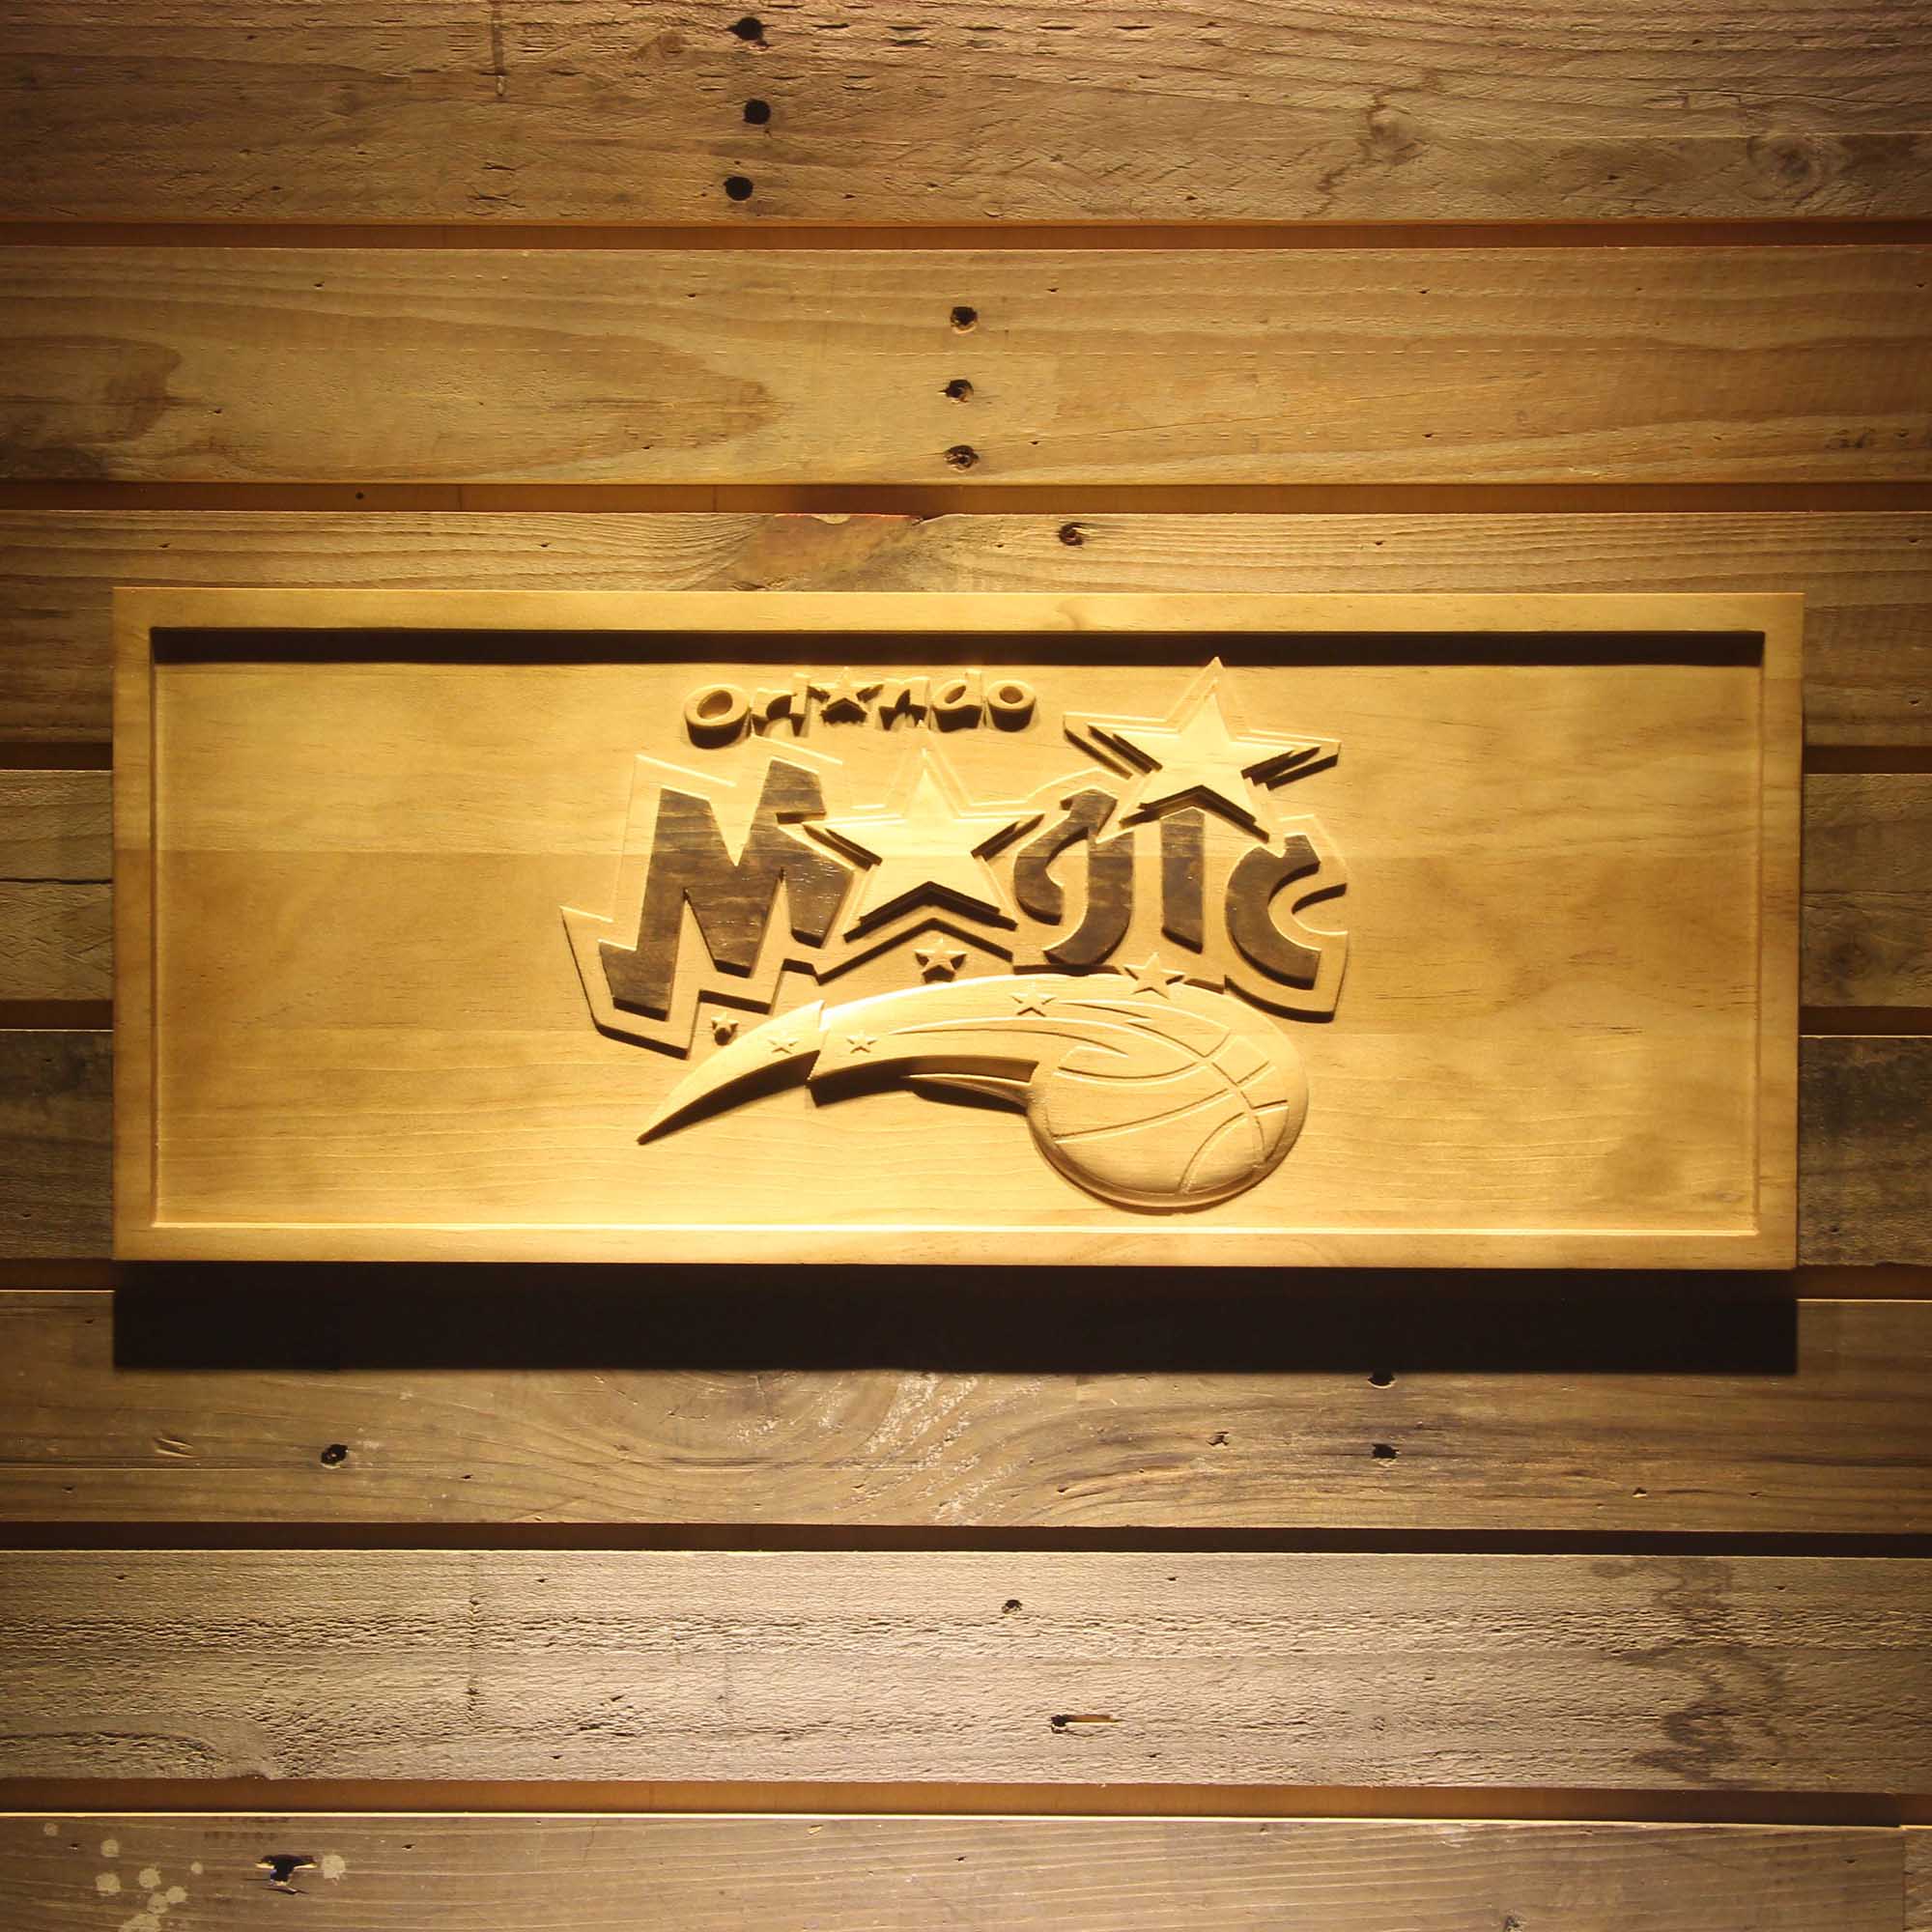 Orlando Magic  3D Solid Wooden Craving Sign